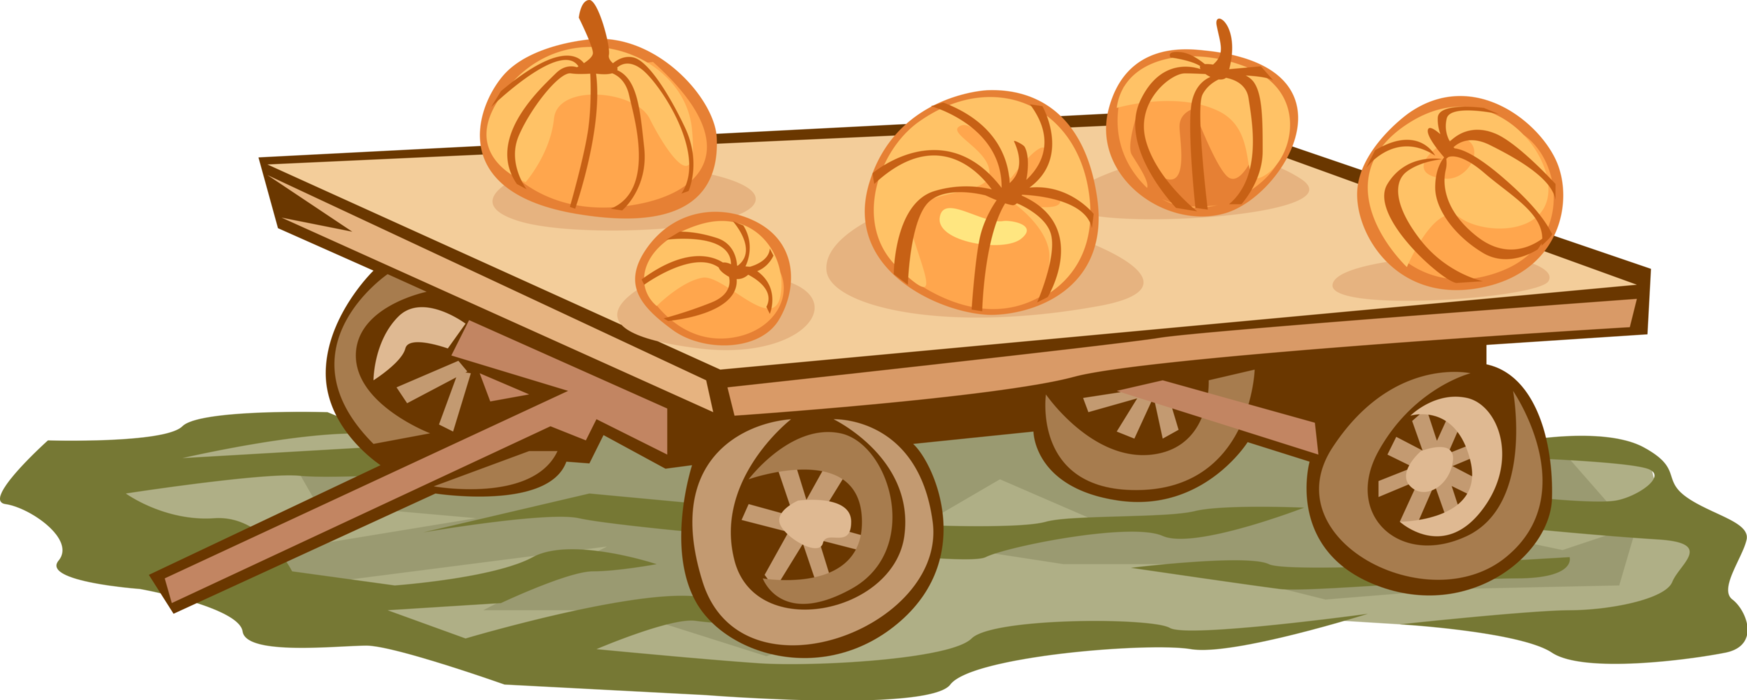 Vector Illustration of Farm Harvest Crop of Squash Pumpkins on Cart Wagon